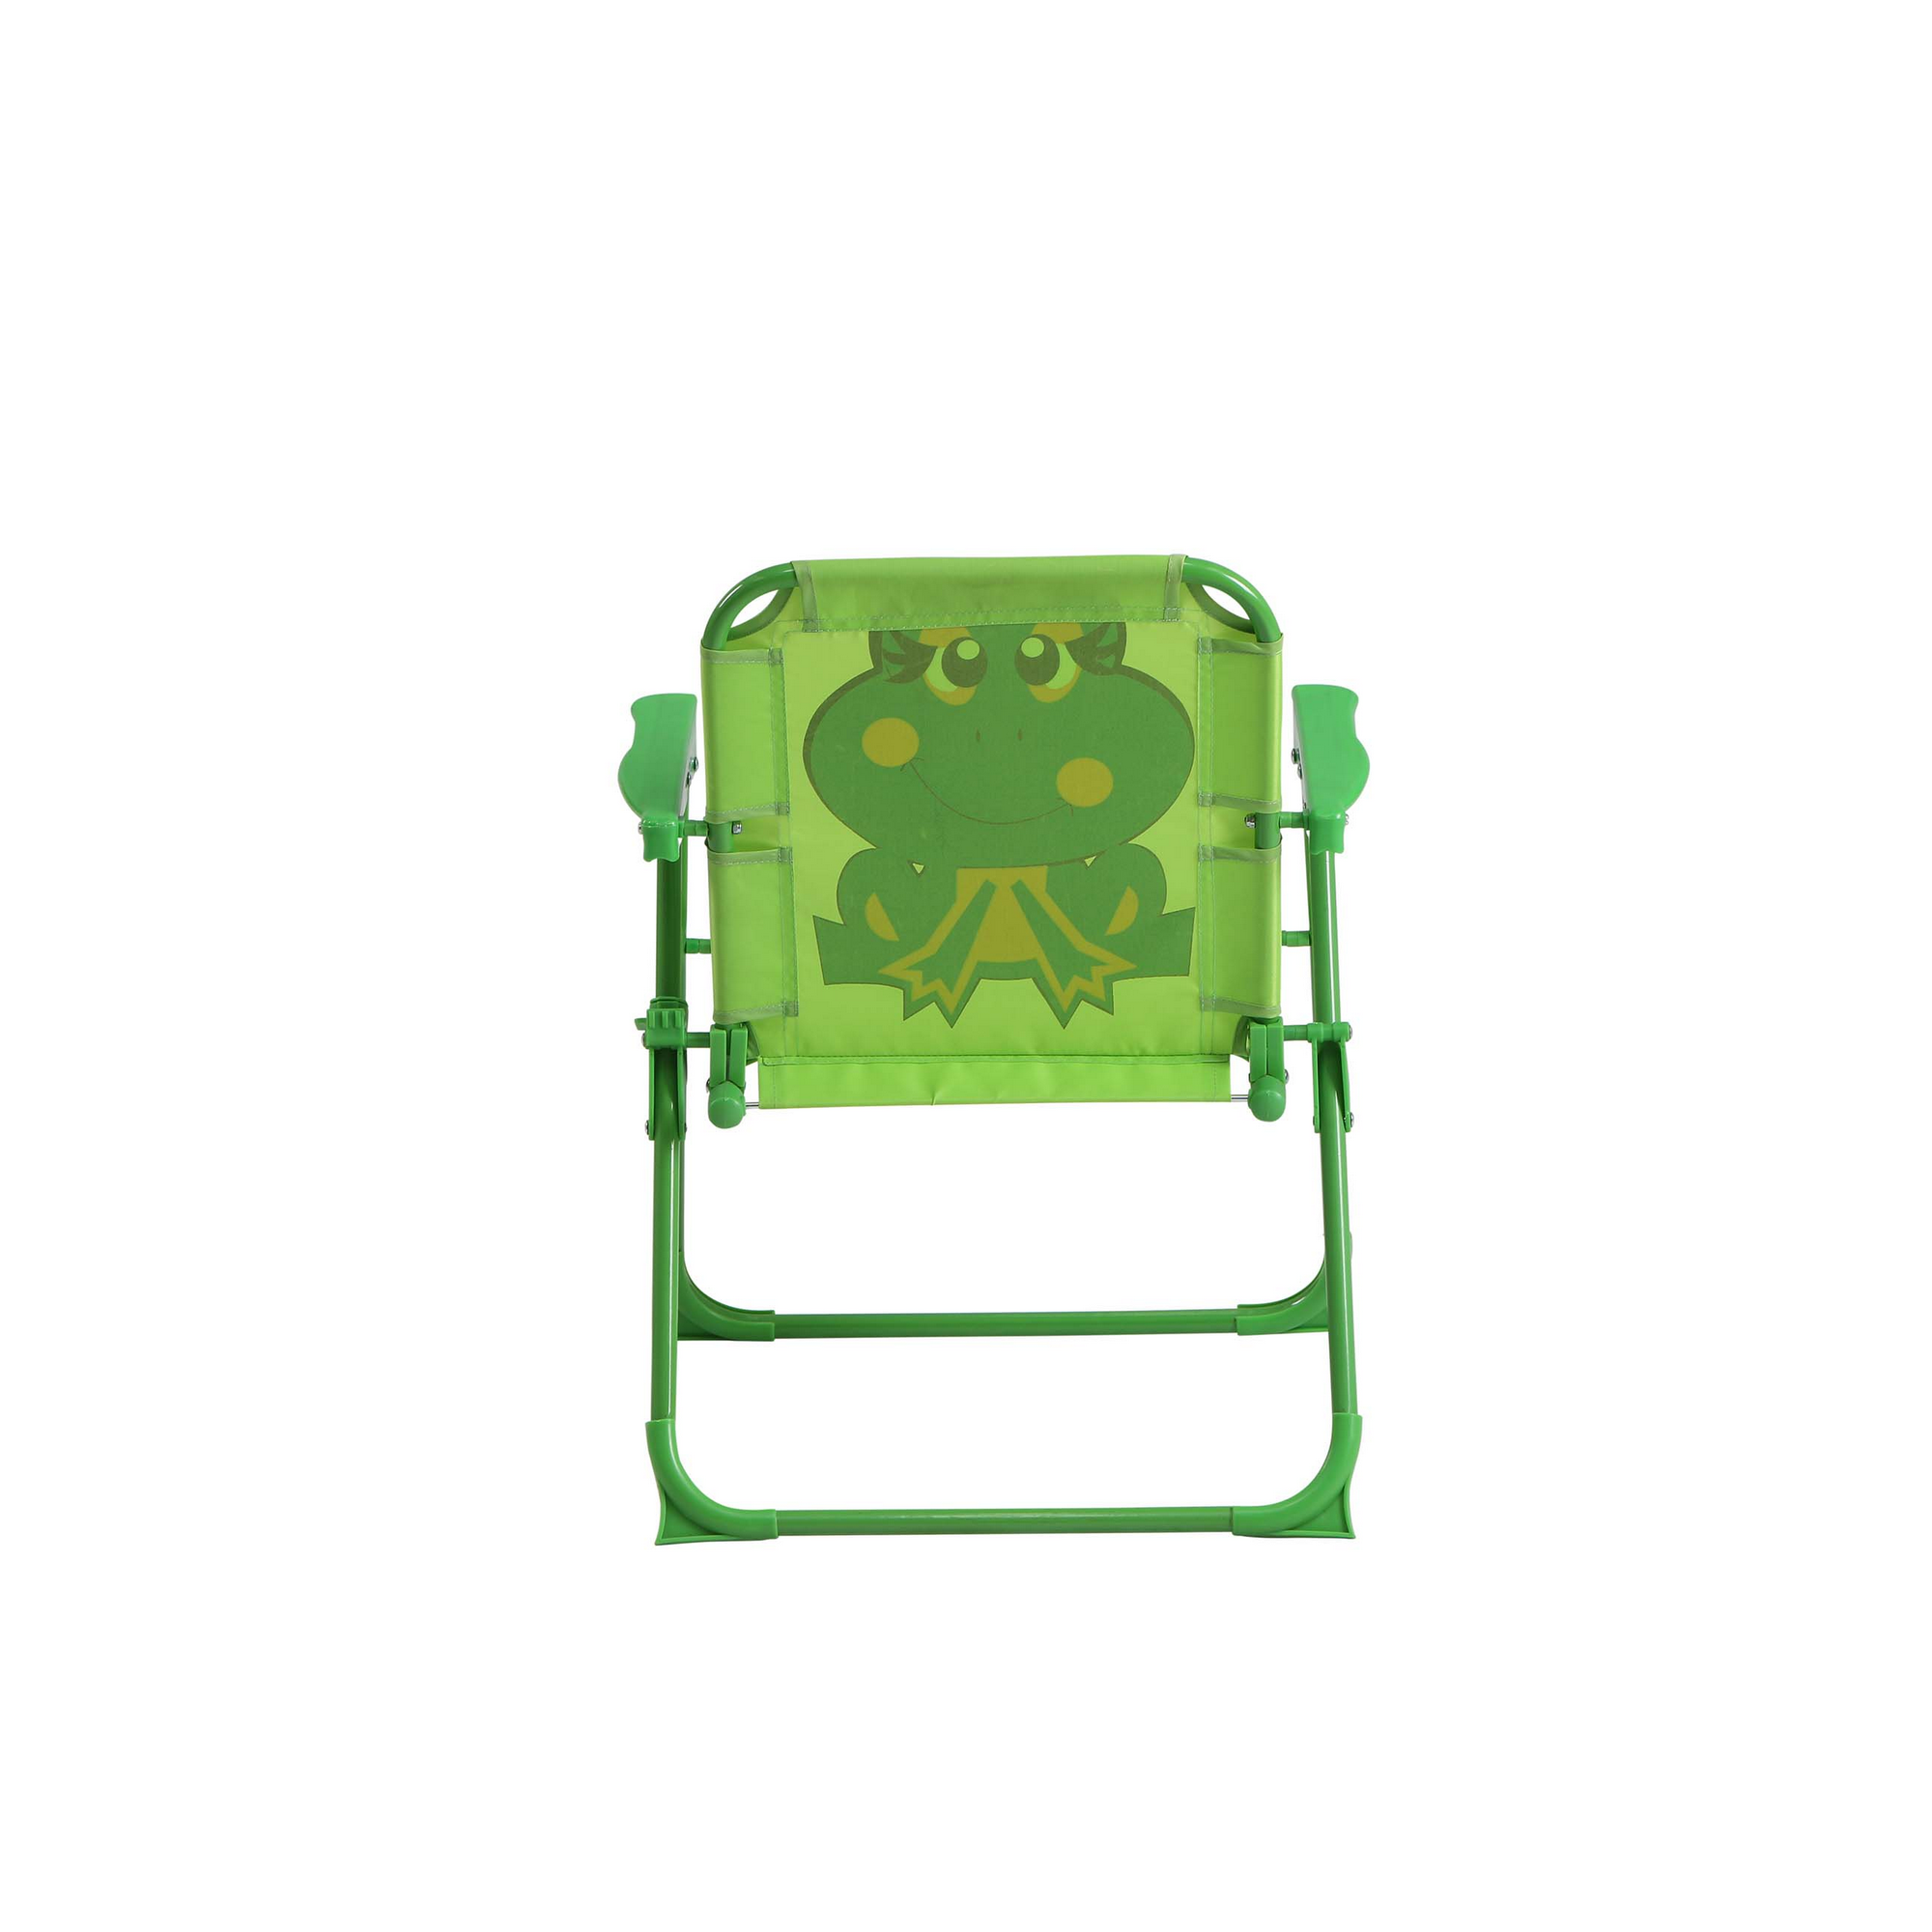 Kindersitzgruppe 'Froggy' grün, 4-teilig + product picture